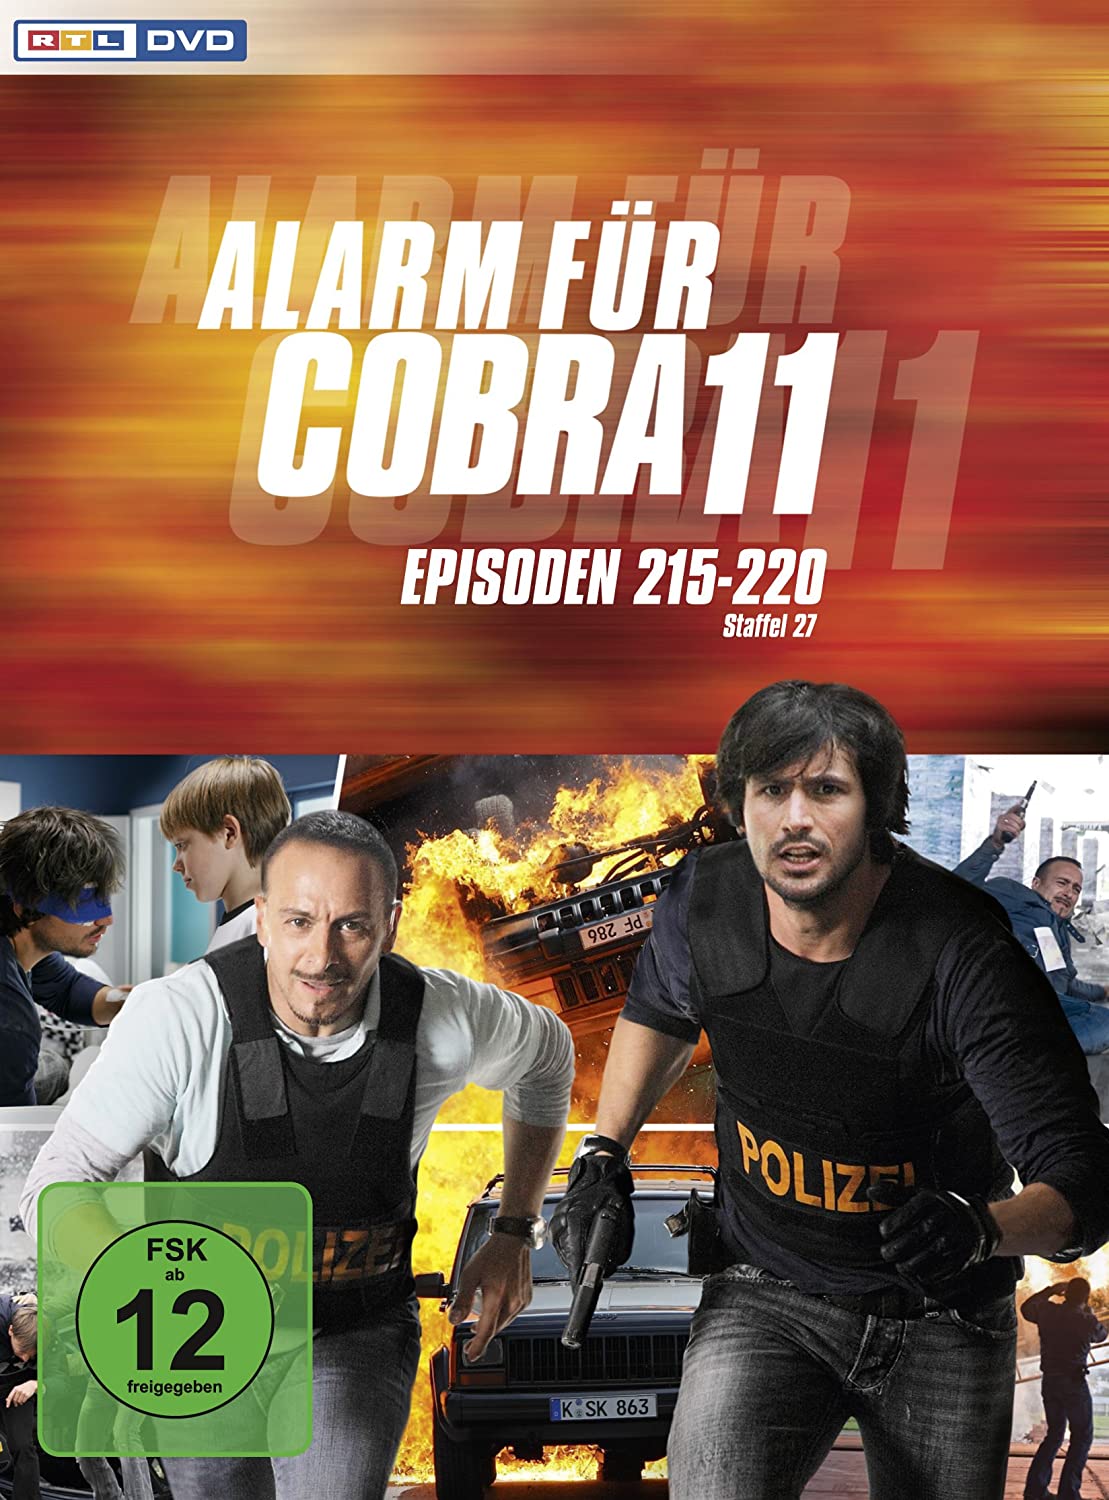 Alarm für Cobra 11 27: Amazon.ca: DVD